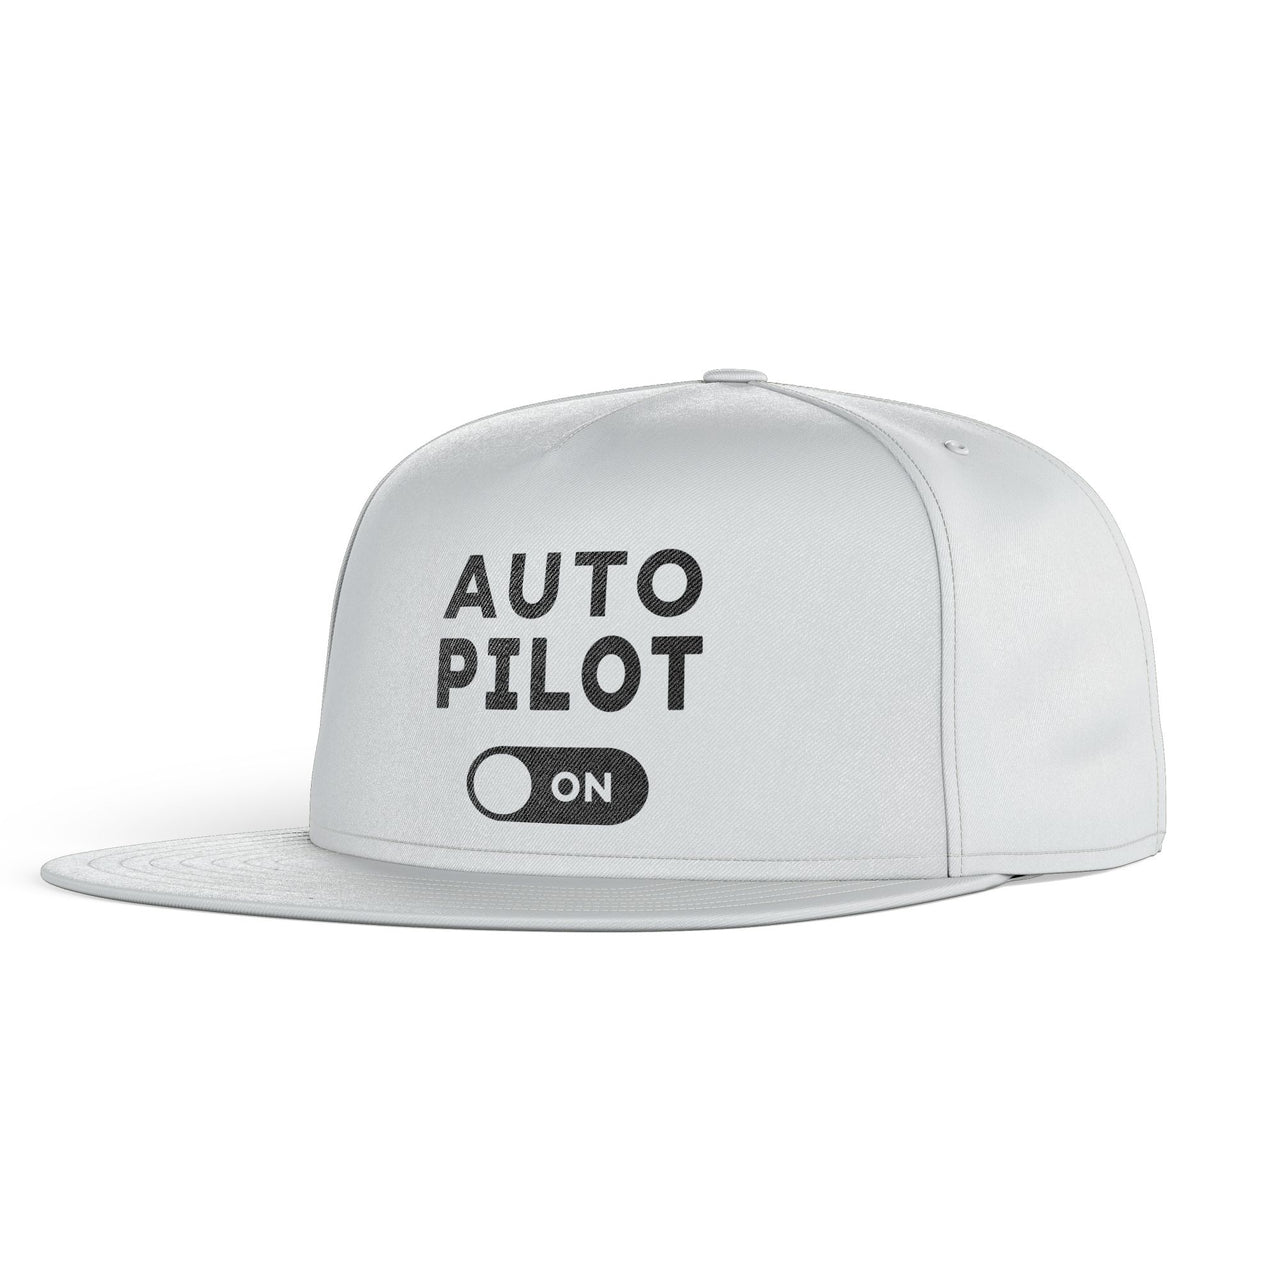 Auto Pilot ON Designed Snapback Caps & Hats